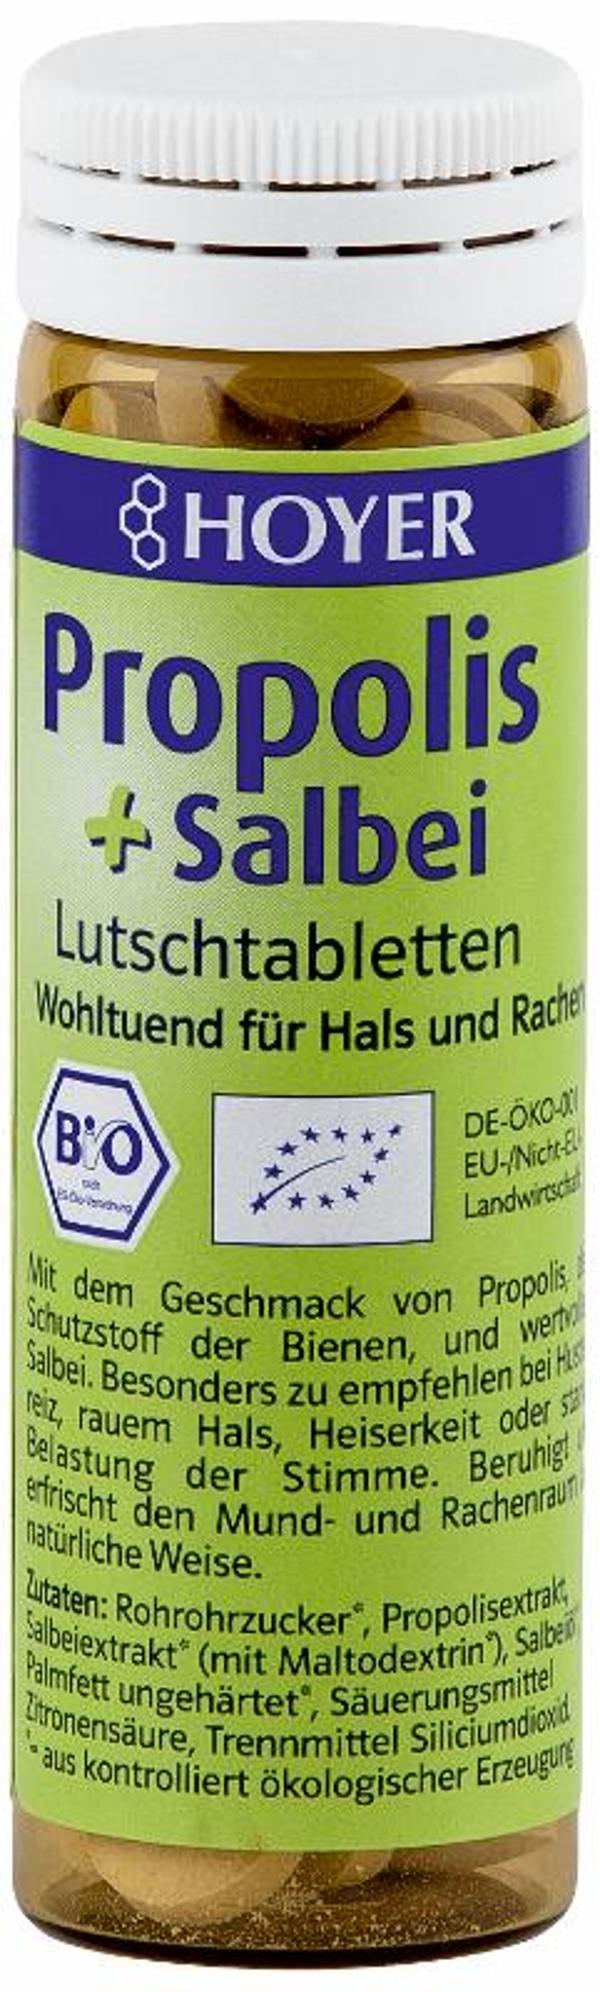 Produktfoto zu Lutschtabletten Propolis-Salbei, 60 Tabletten